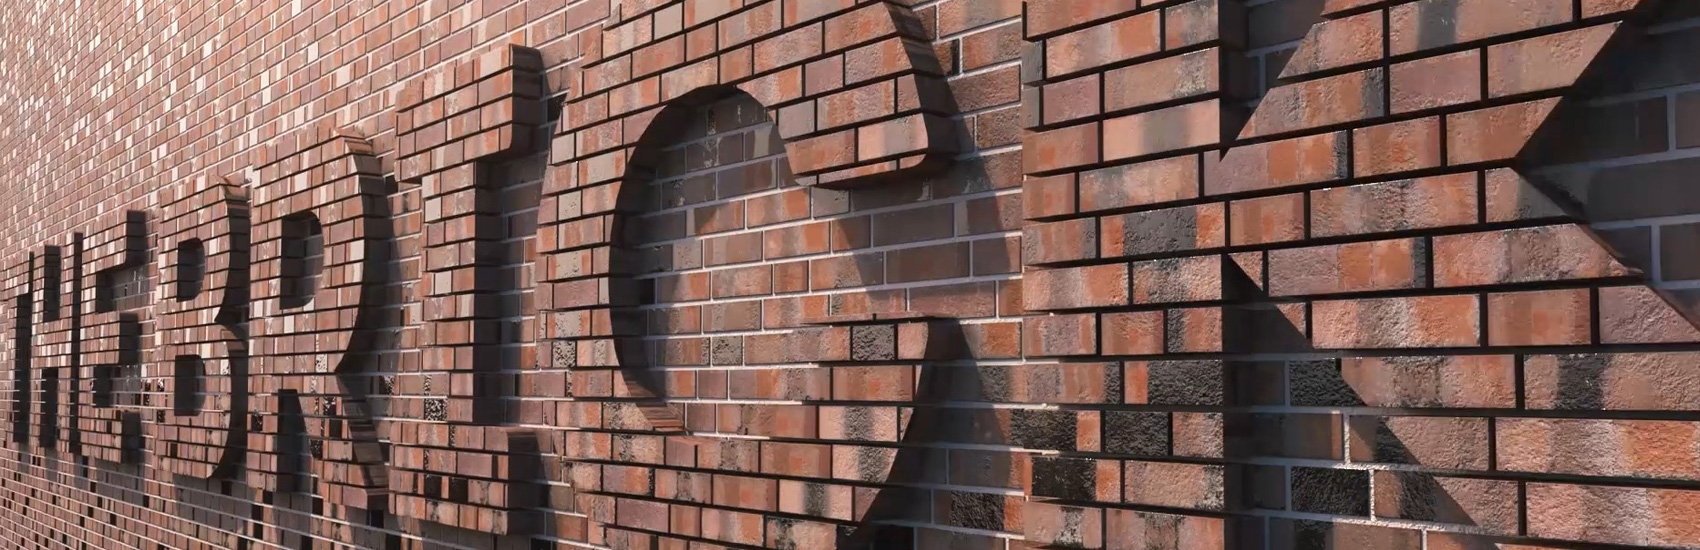 The Brick Video